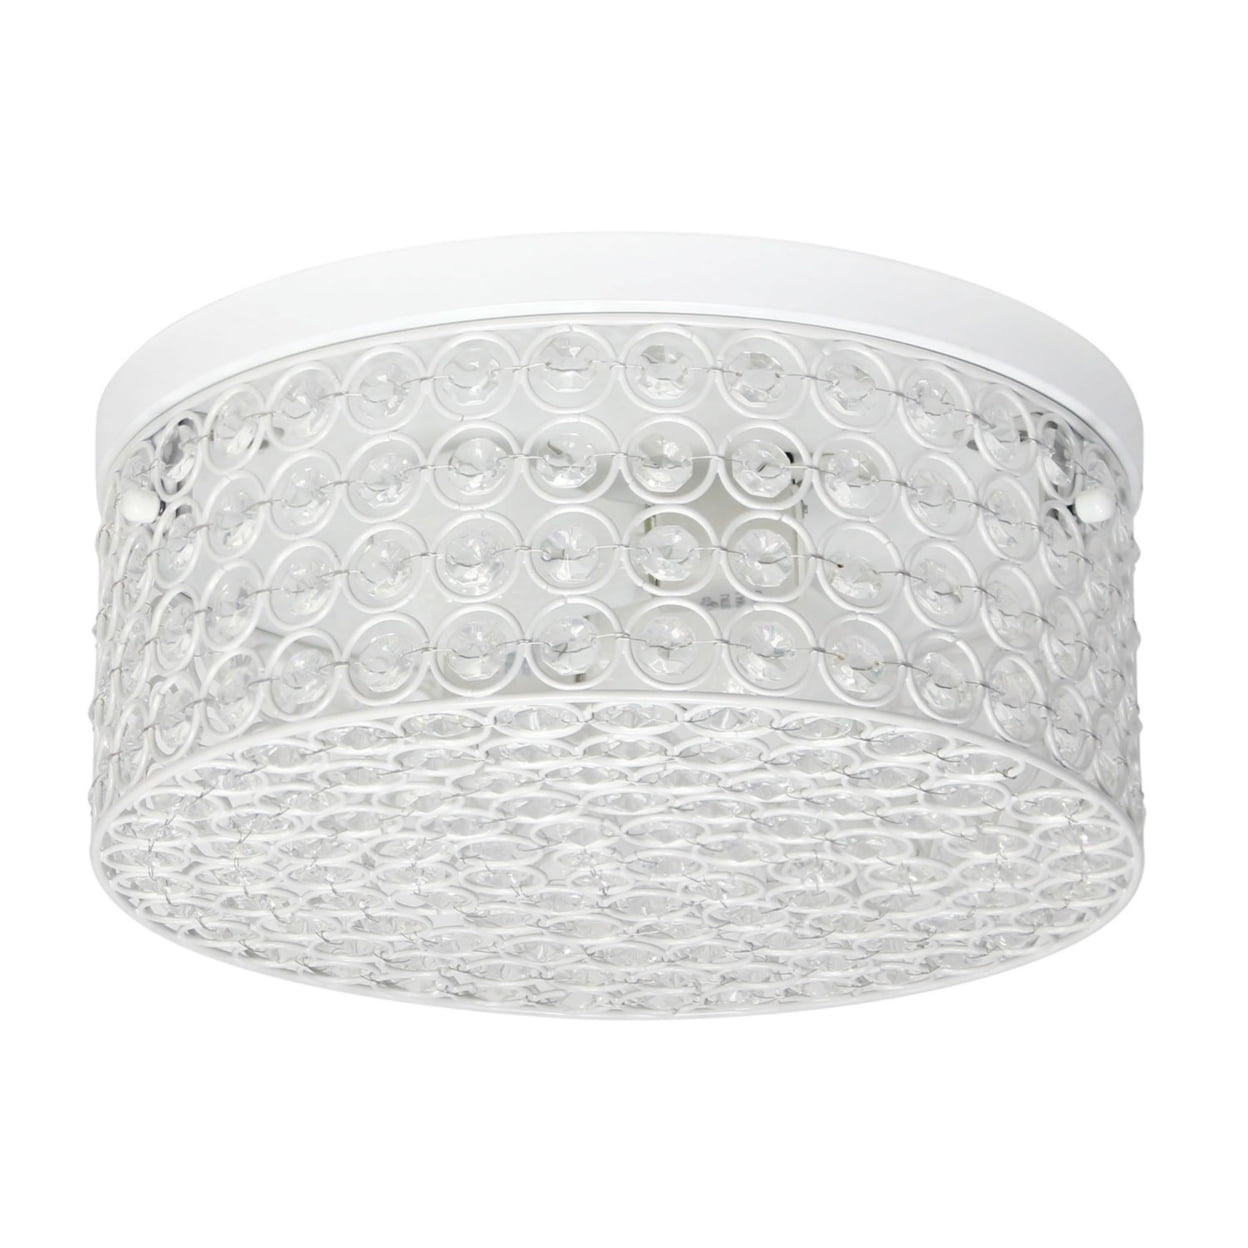 Elegant Designs Fm1003-wht 12 In. Elipse Crystal 2 Light Round Ceiling Flush Mount, White